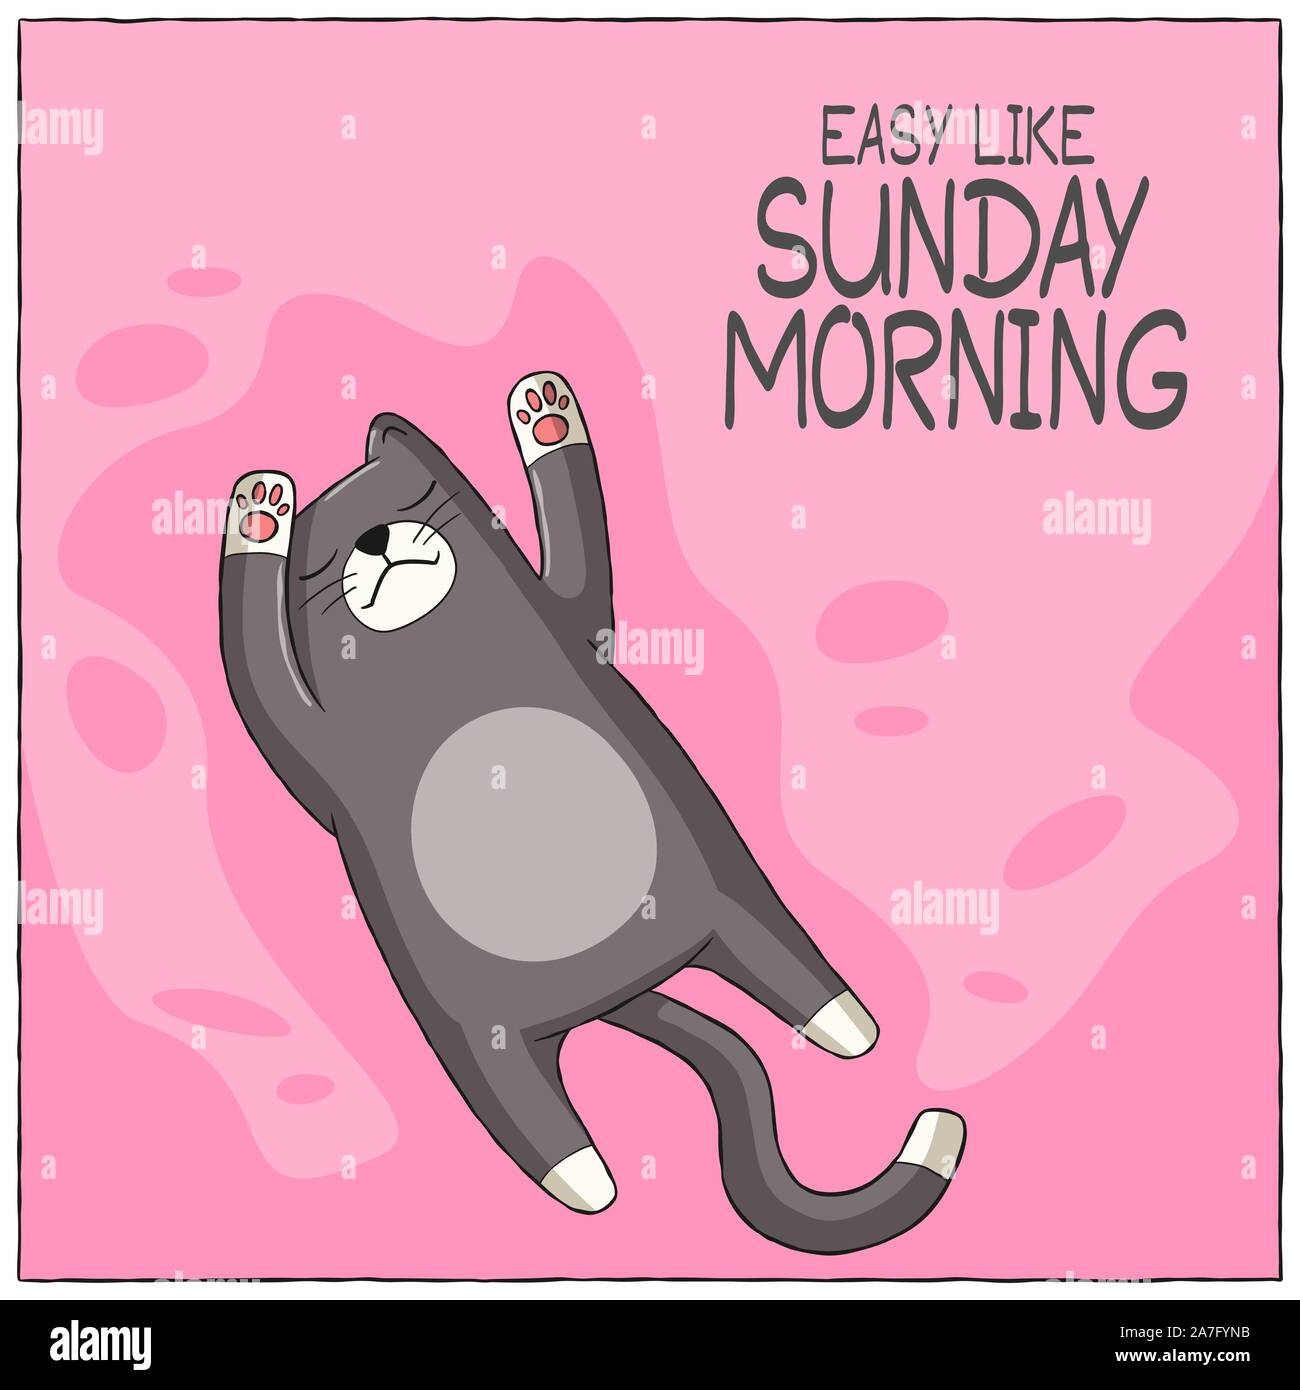 Easy like sunday morning. Sleeping cat. Concept design. Hand drawn ...